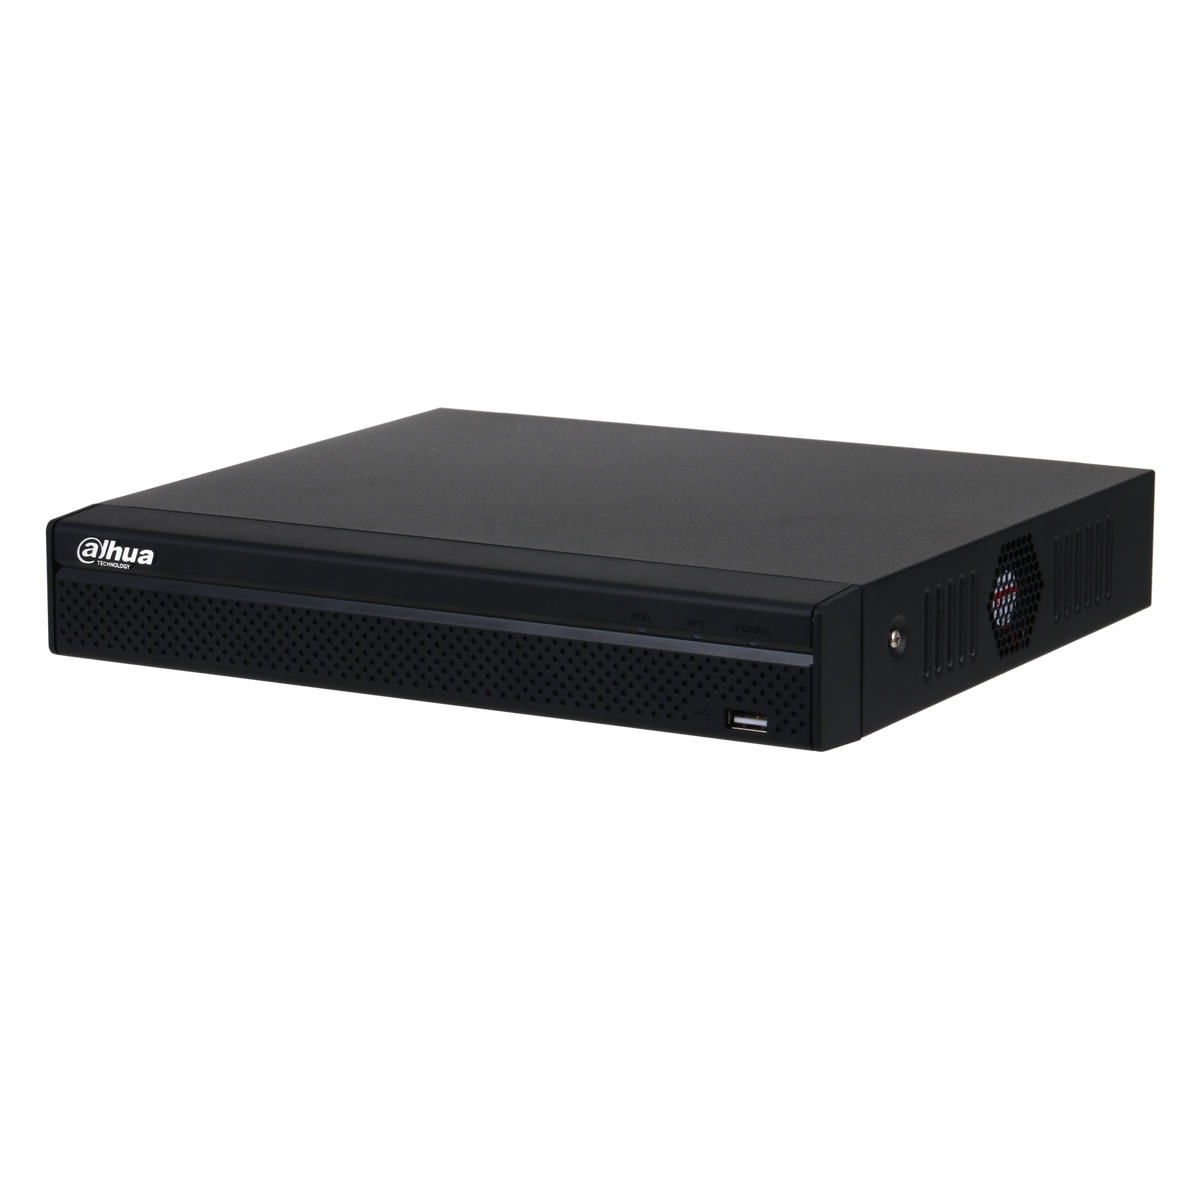 DAHUA NVR4108HS-8P-4KS3 8CH Compact 1U 8PoE 1HDD Lite Network Video Recorder